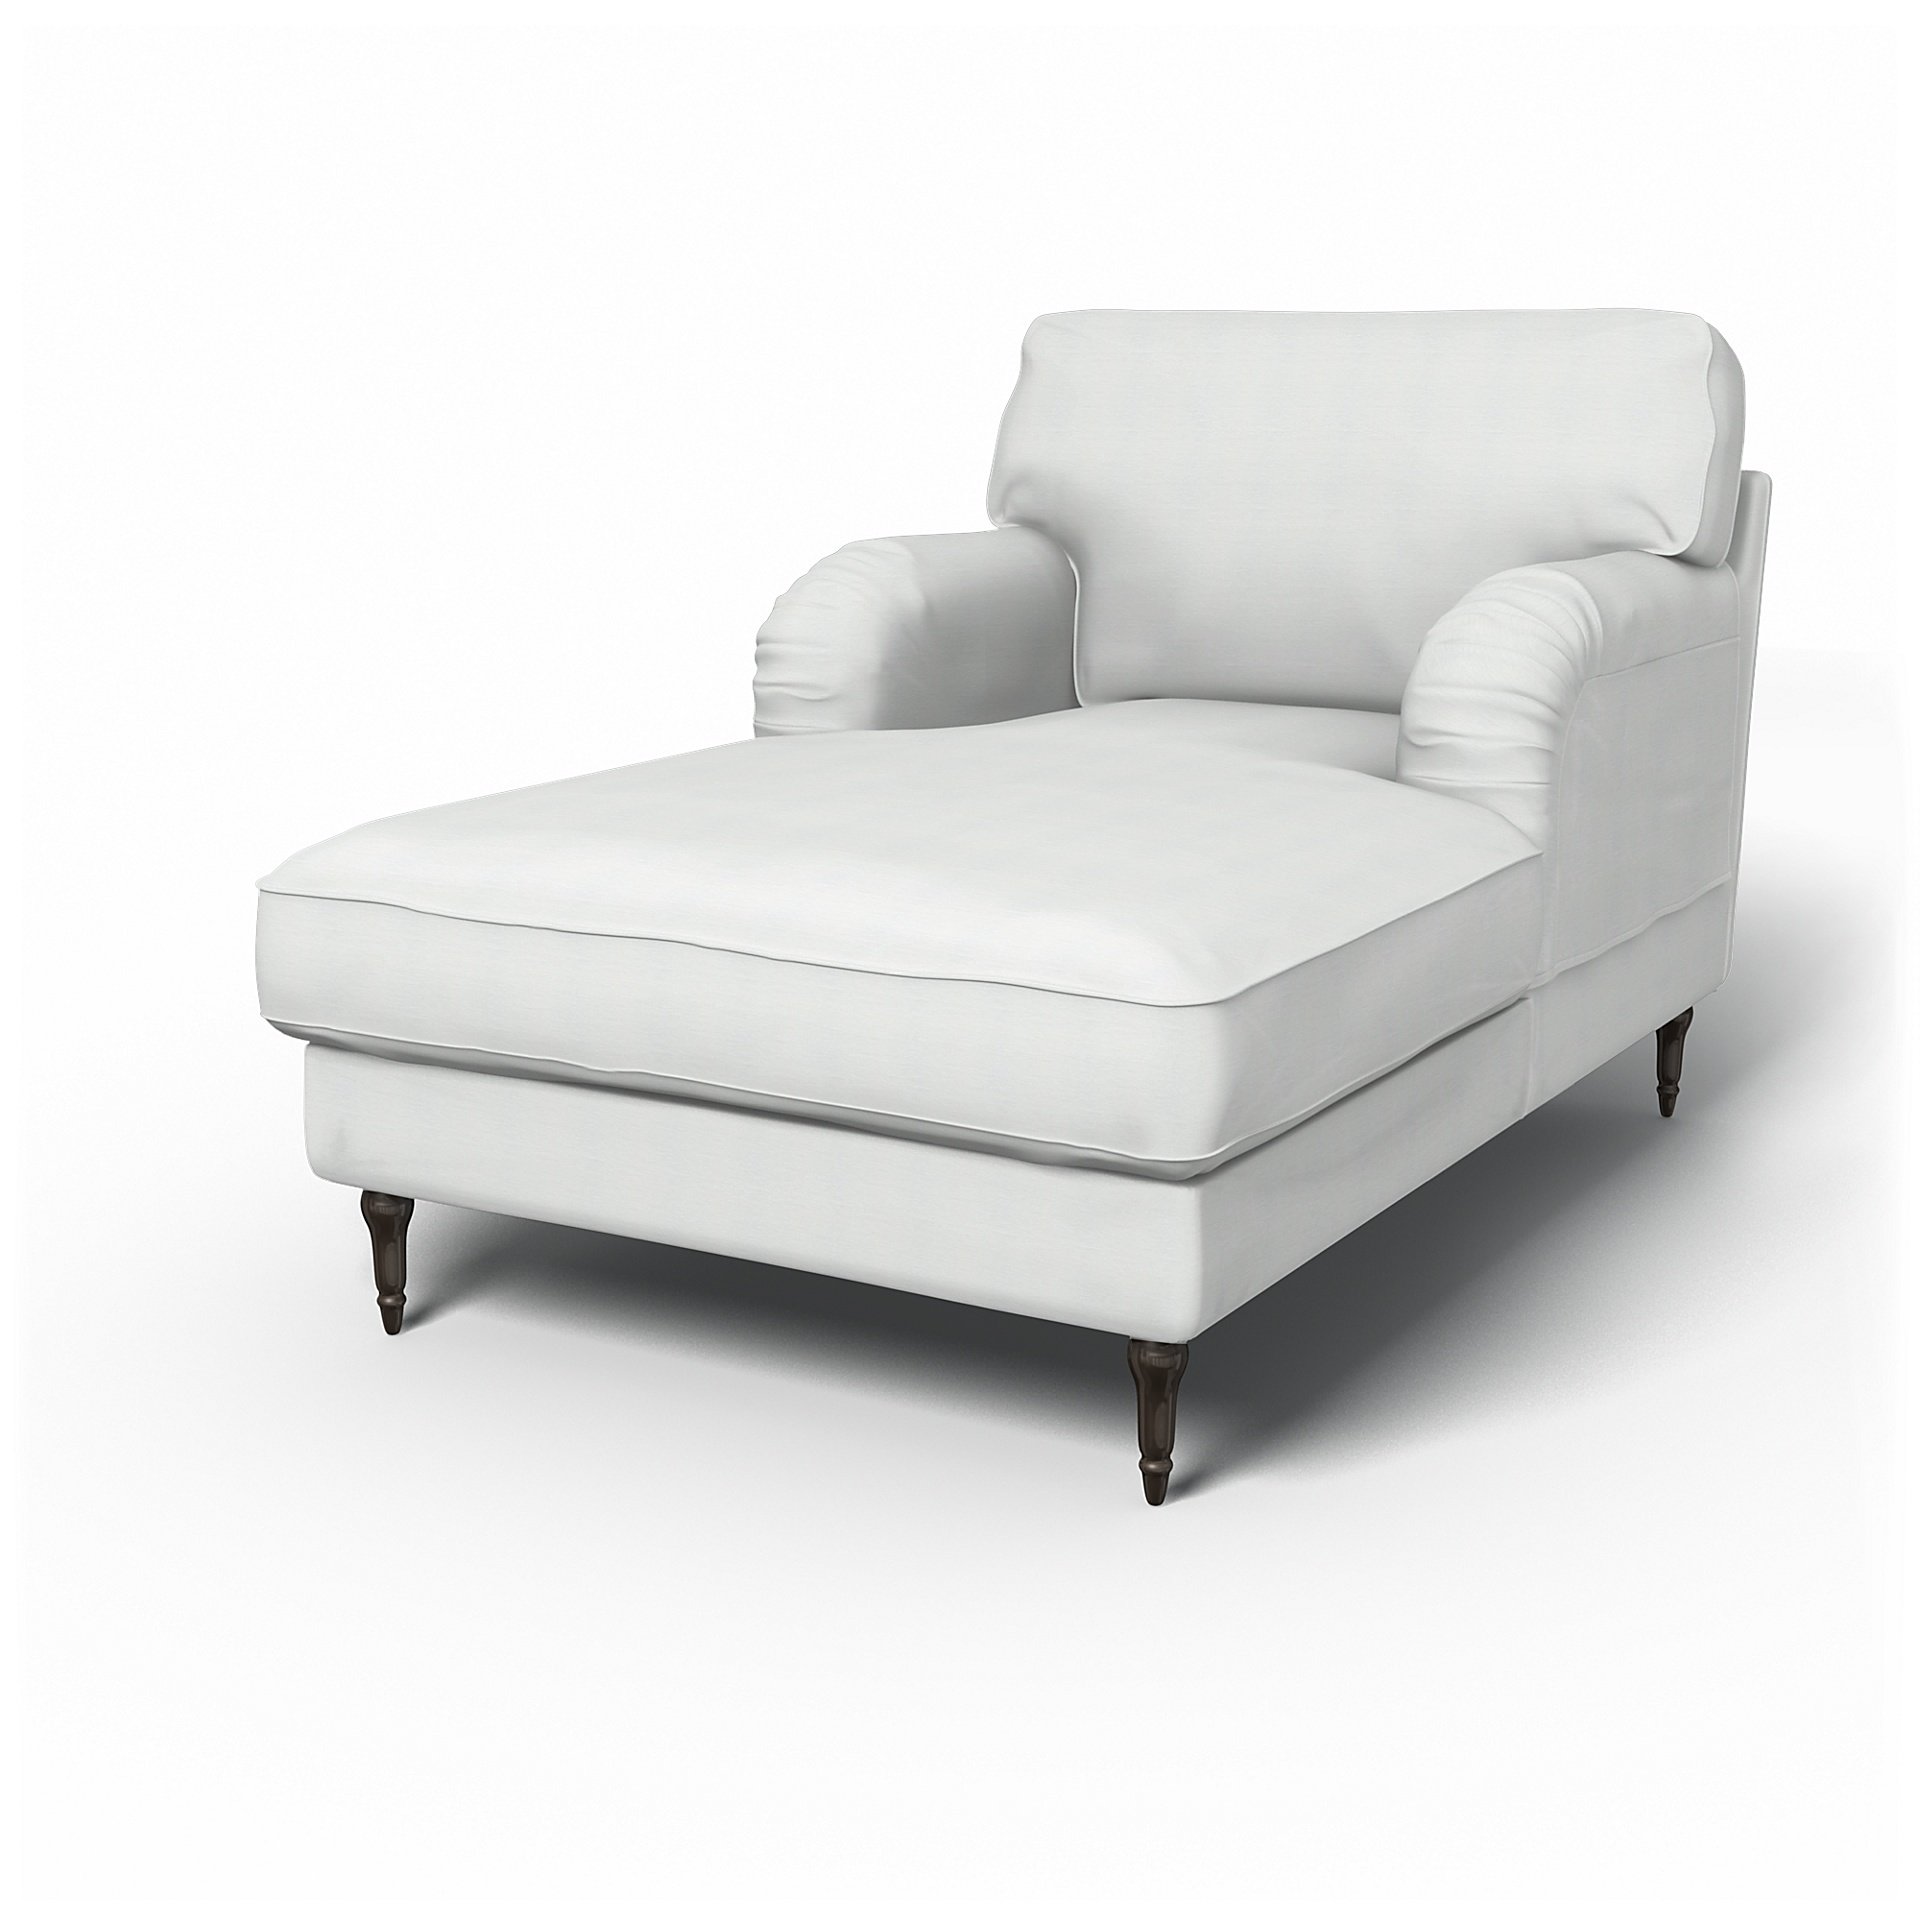 IKEA - Stocksund Chaise Longue Cover, White, Linen - Bemz